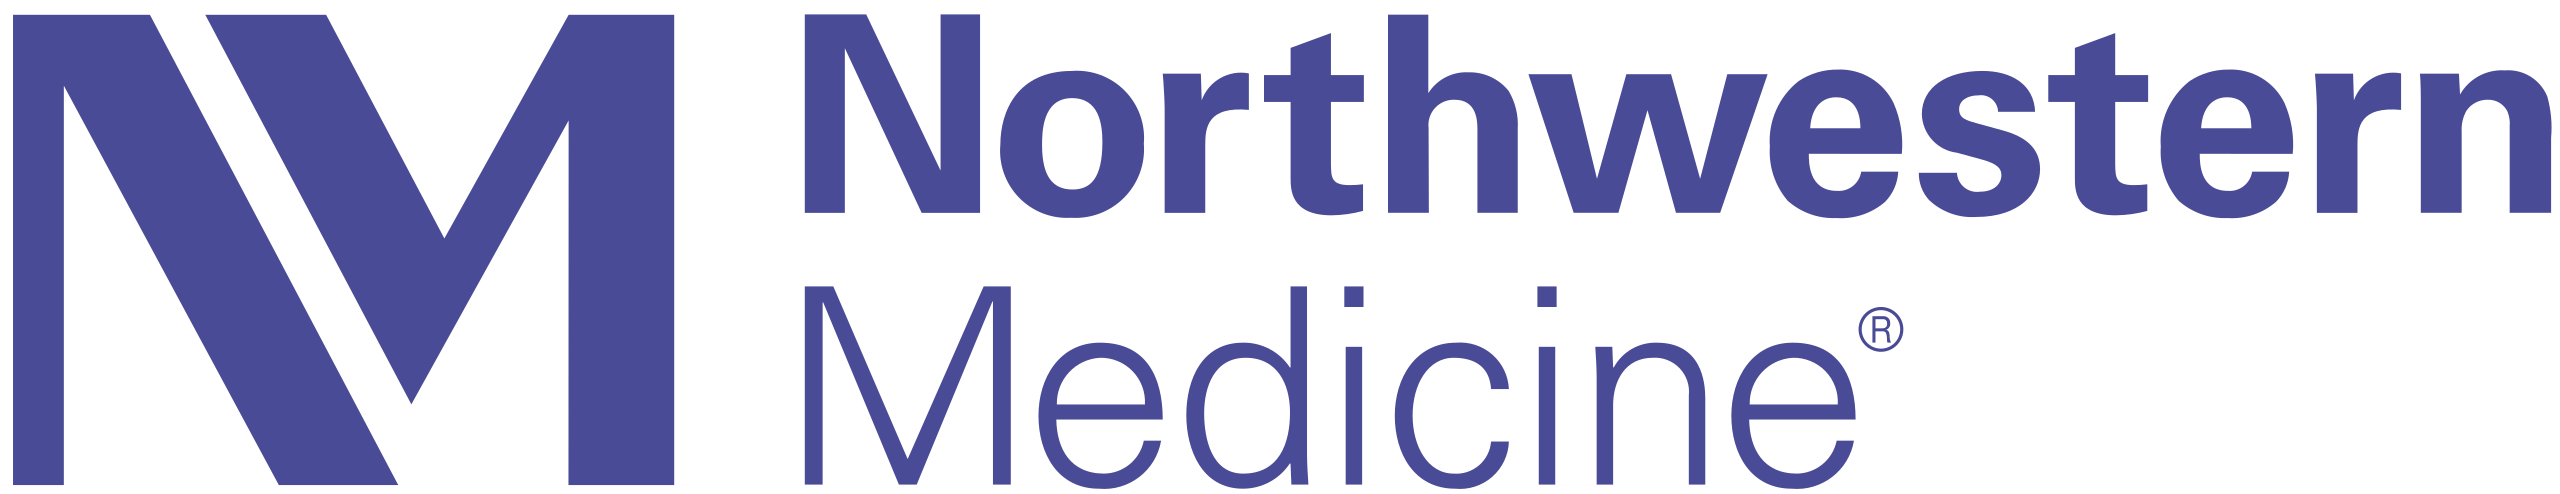 2560px-Northwestern_Medicine_logo.svg